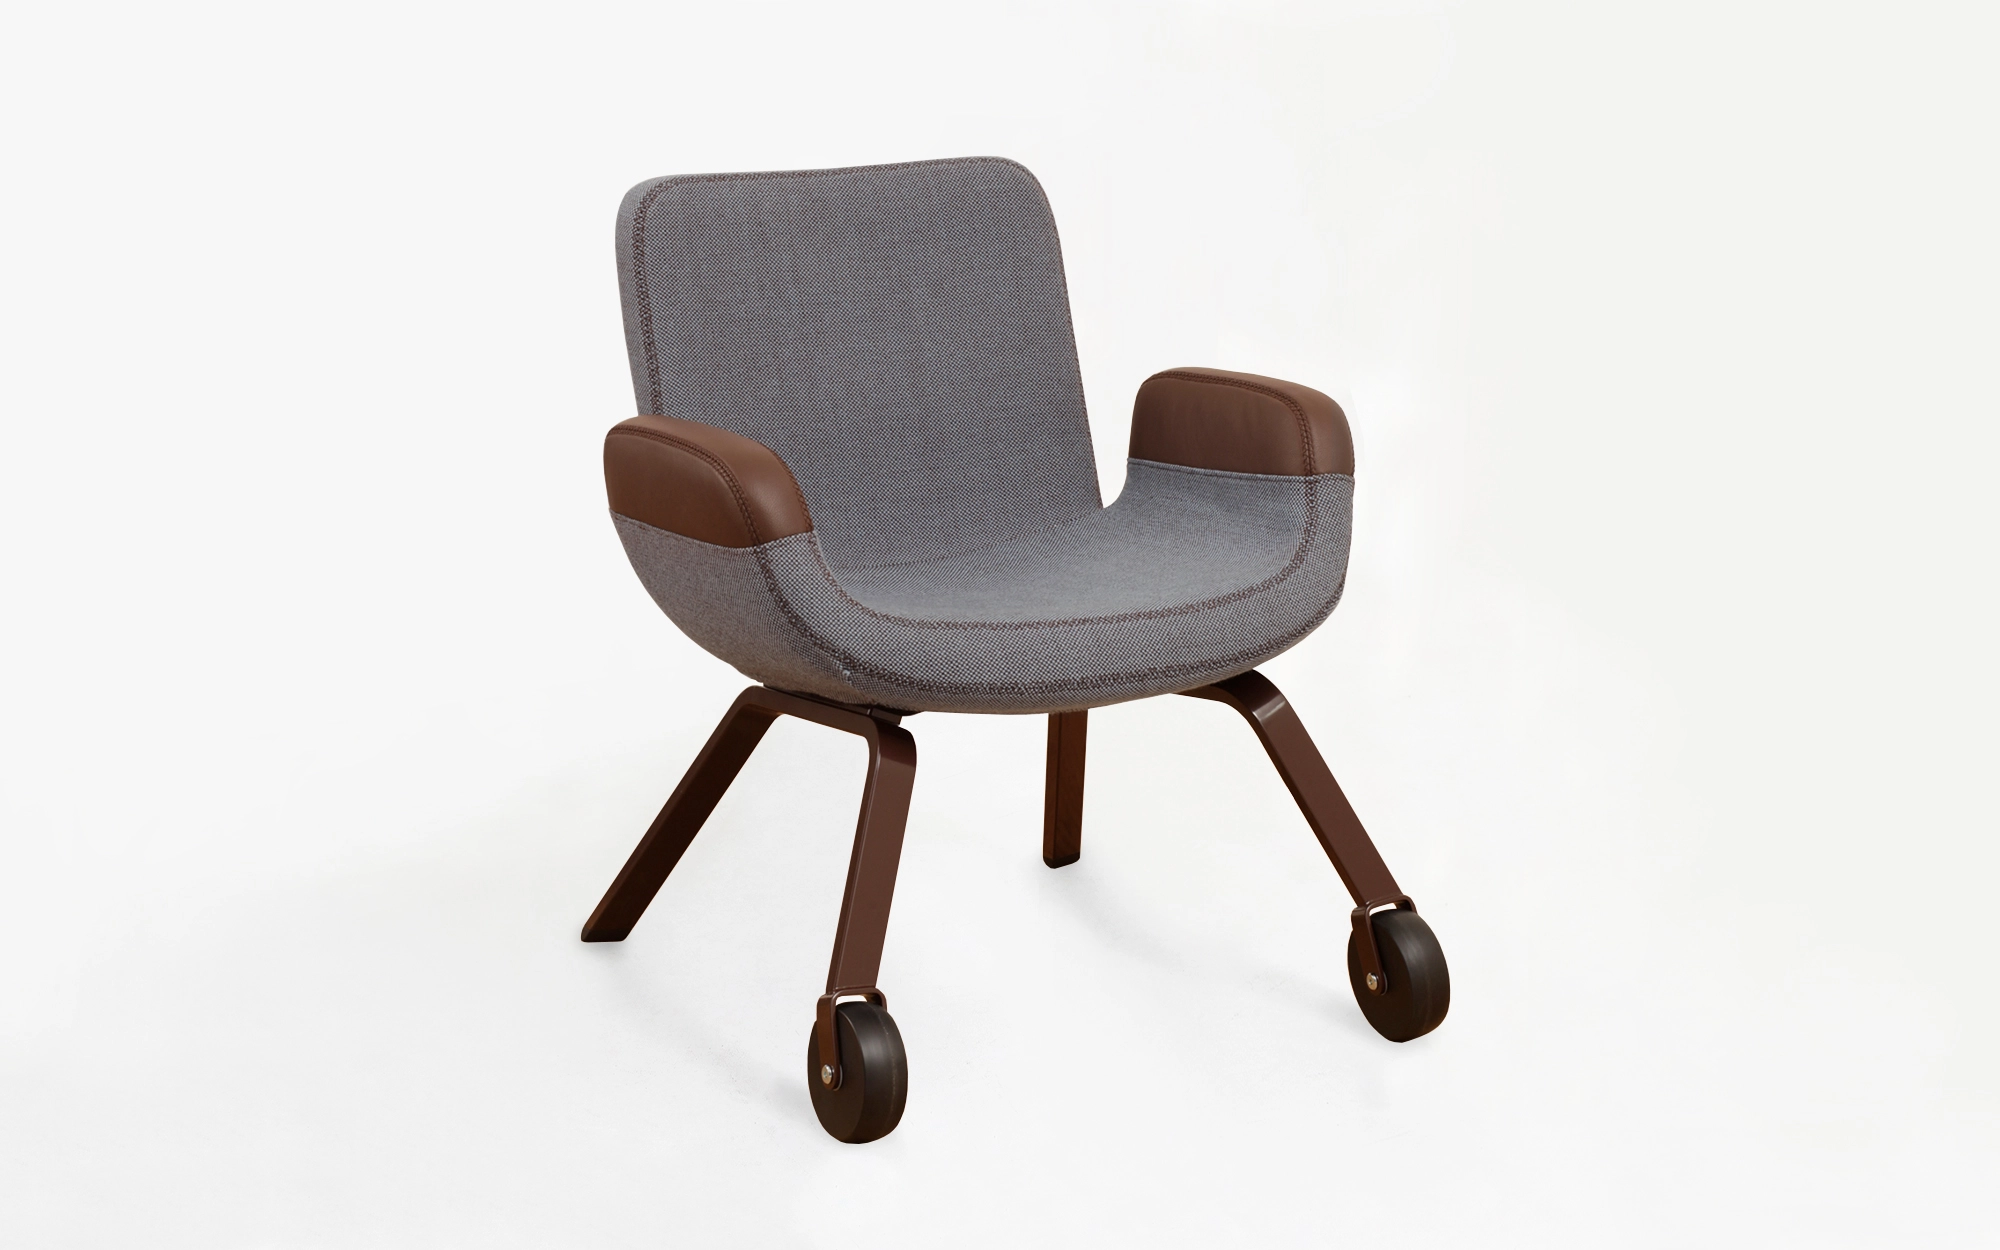 UN Lounge Chair - Hella Jongerius - Table light - Galerie kreo